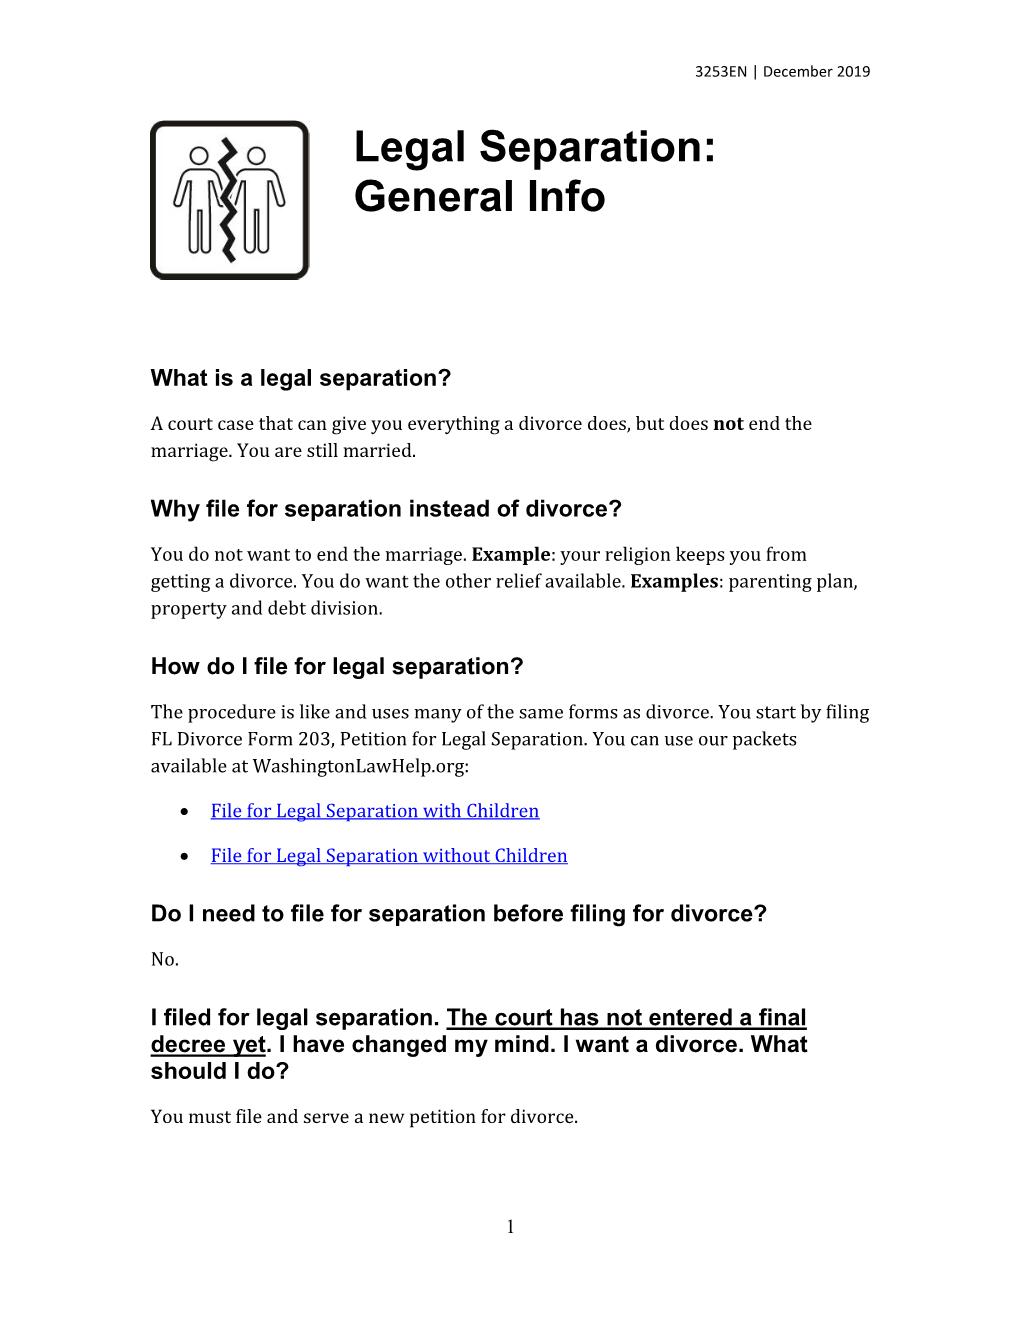 Legal Separation: General Info